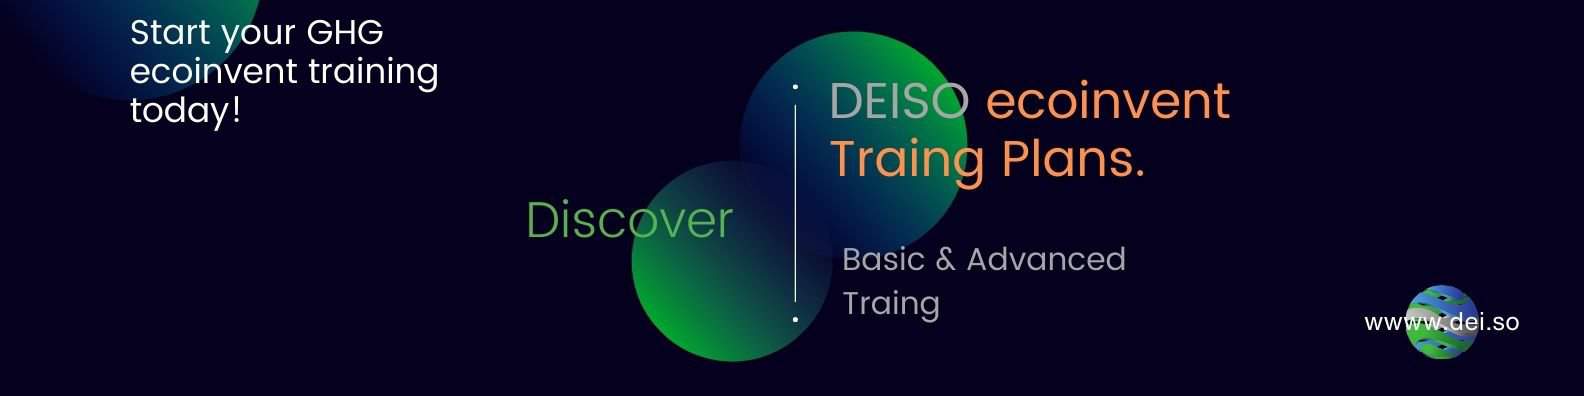 DEISO ecoinvent 訓練計畫和課程